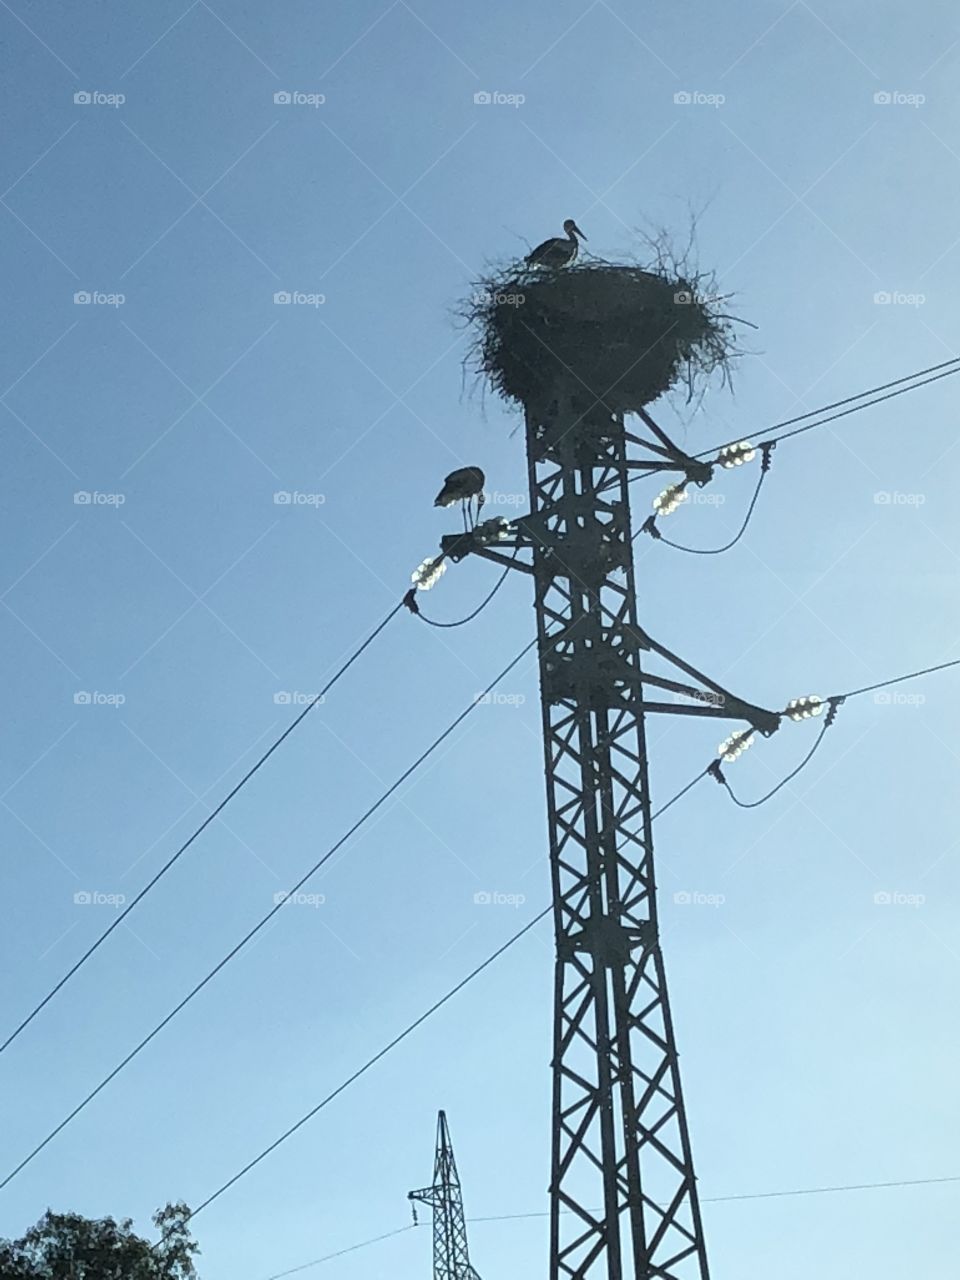 Stork’s Nest on Antenna